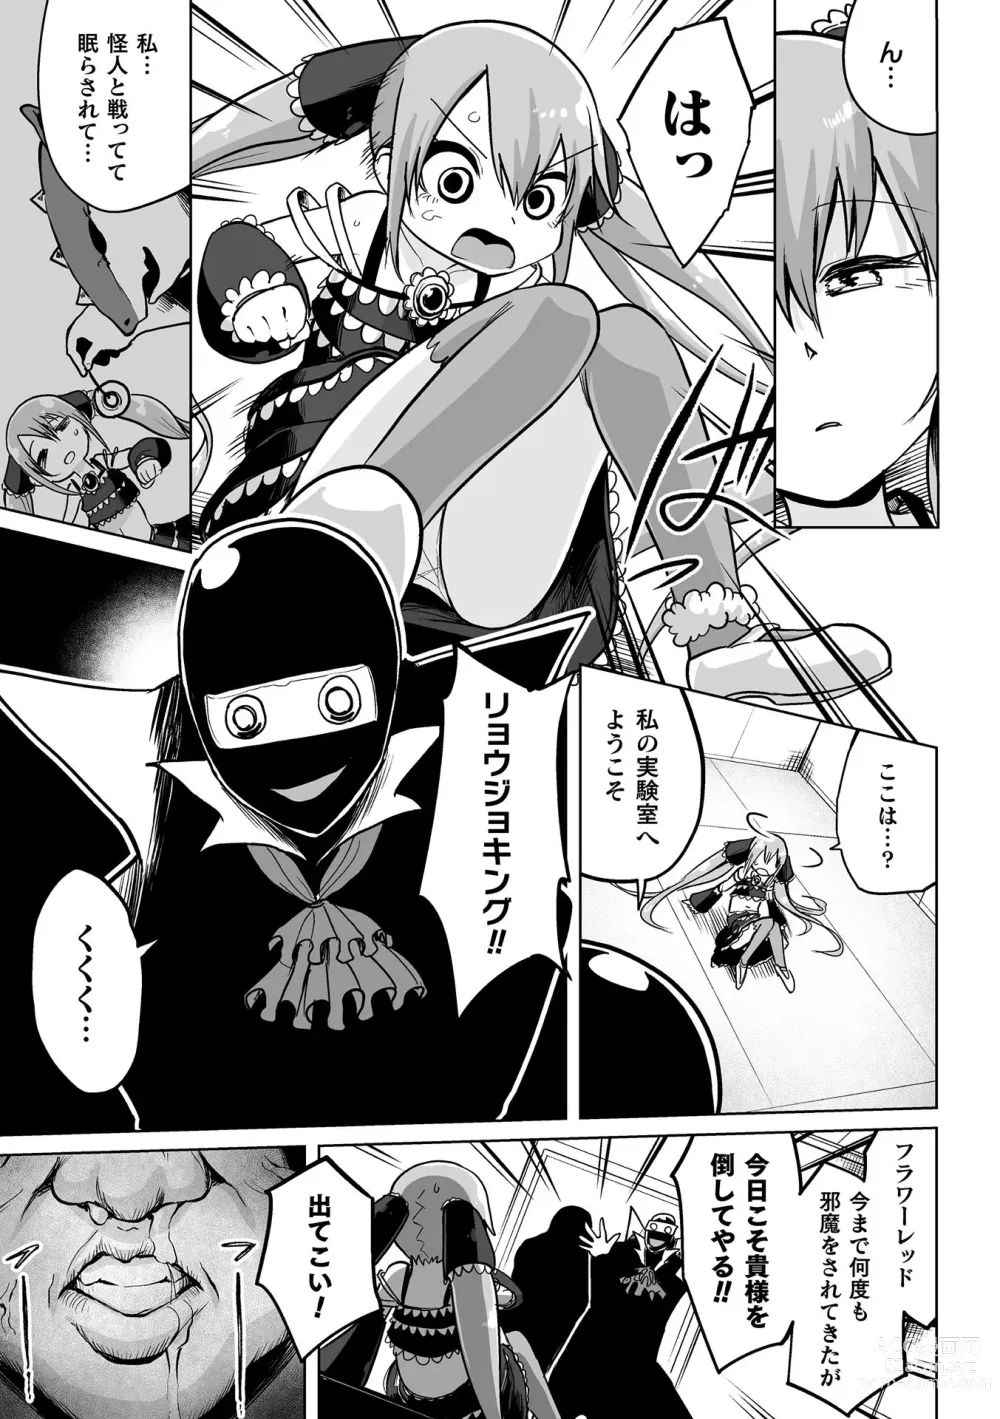 Page 153 of manga Kukkoro Heroines Vol. 34